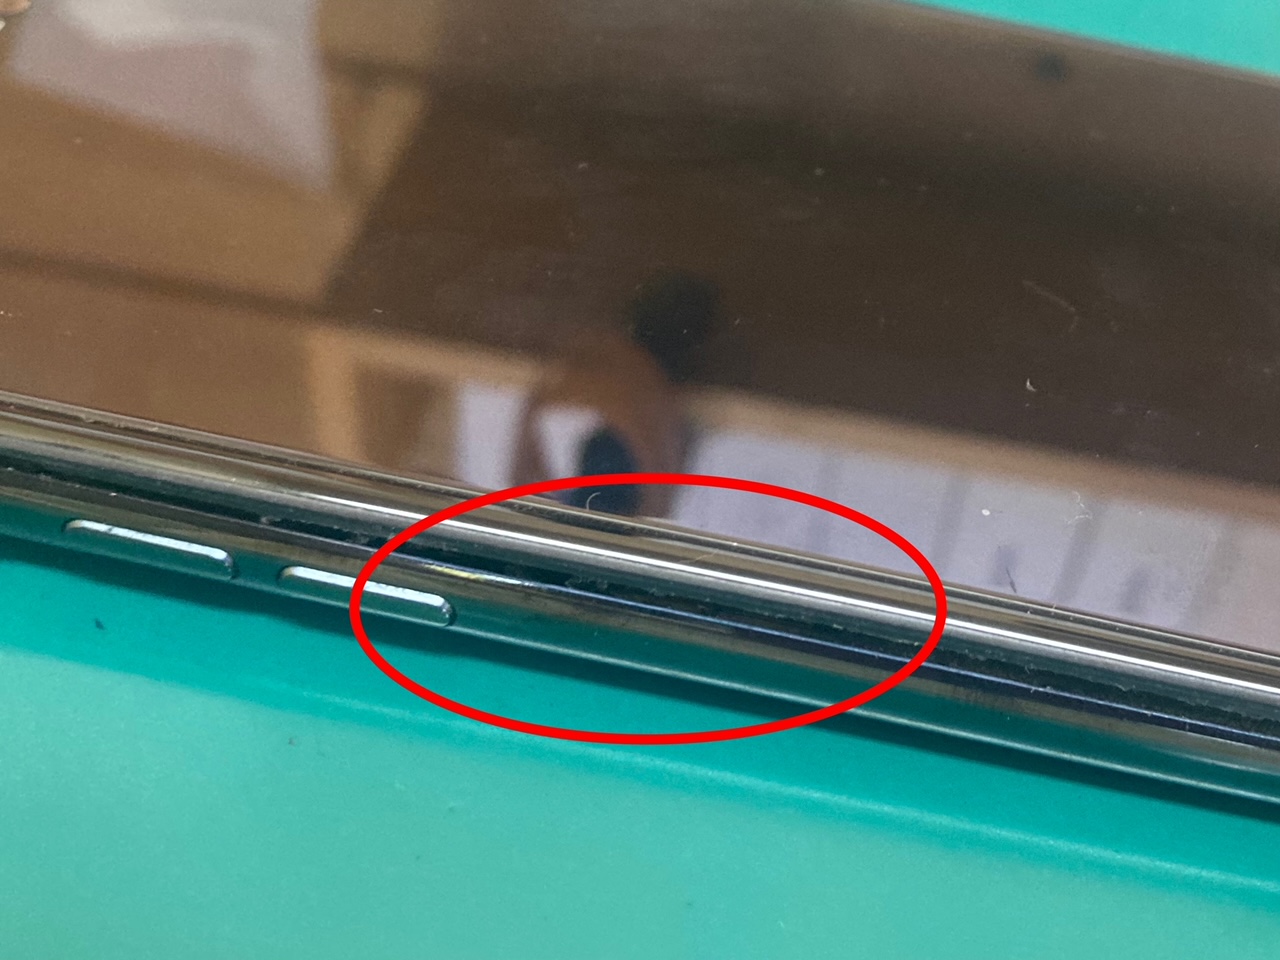 iPhoneを真横から見て隙間が空いていたら、バッテリー膨張の可能性がありますのでご注意ください。